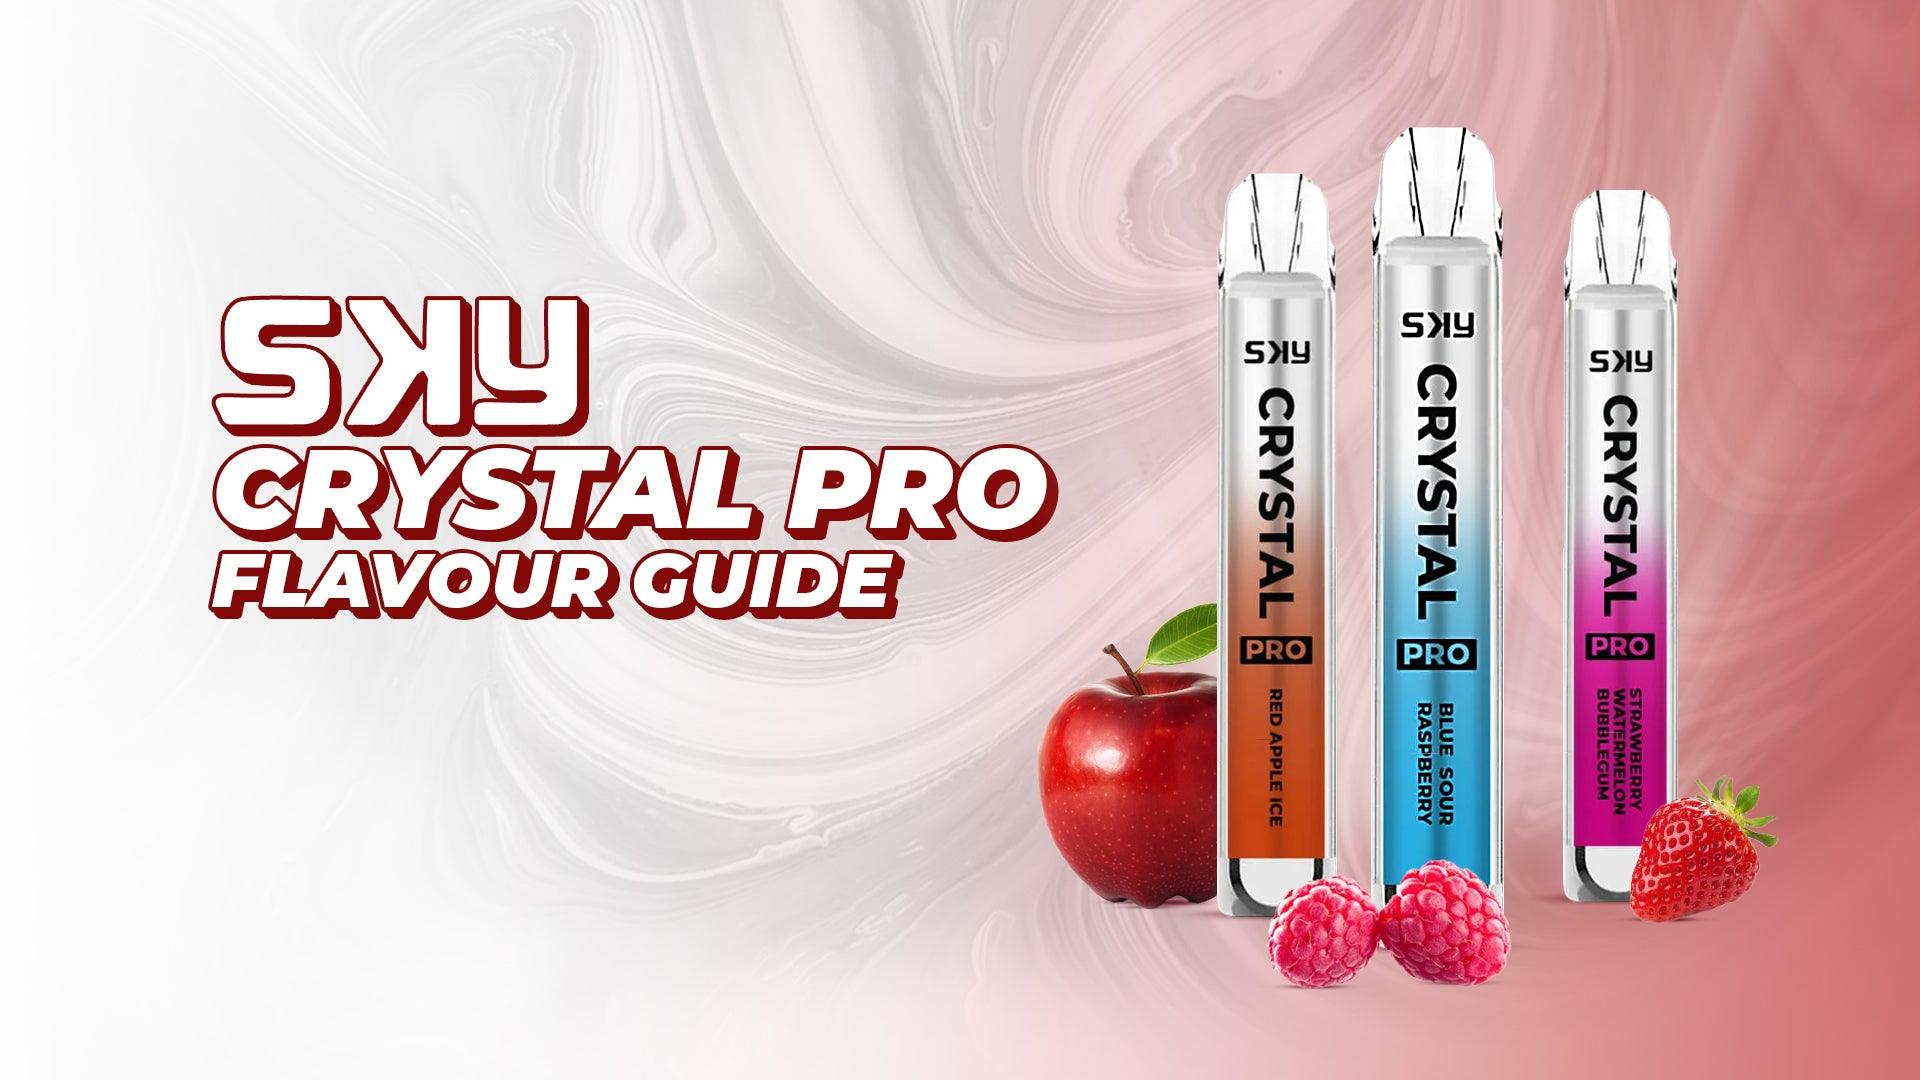 Sky Crystal Pro Flavour Guide - Brand:SKY, Category:Vape Kits, Sub Category:Disposables